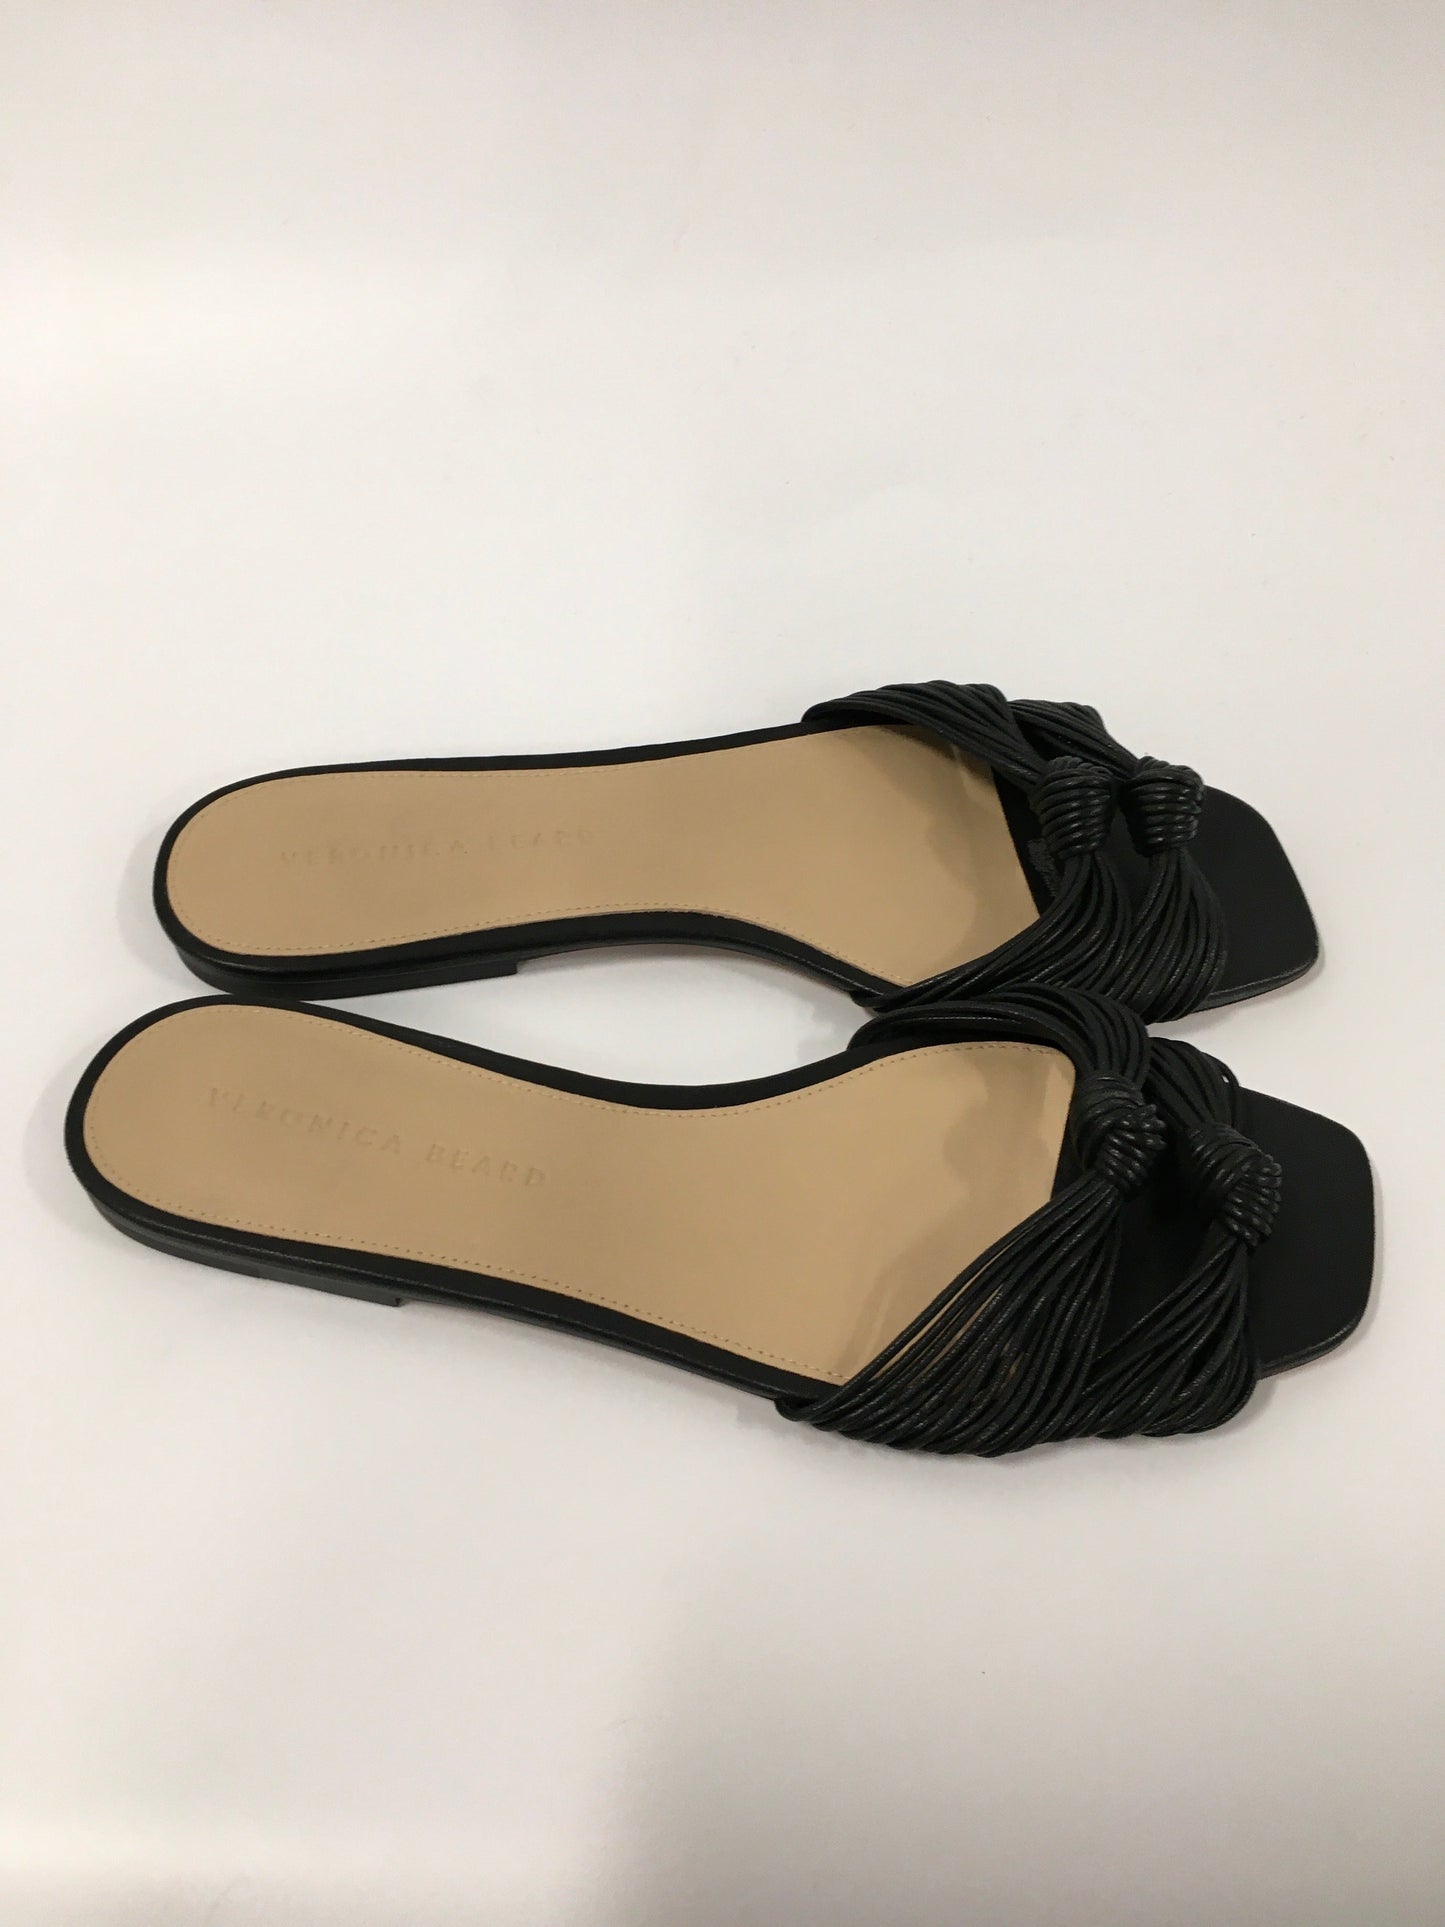 Black Sandals Flats Veronica Beard, Size 9